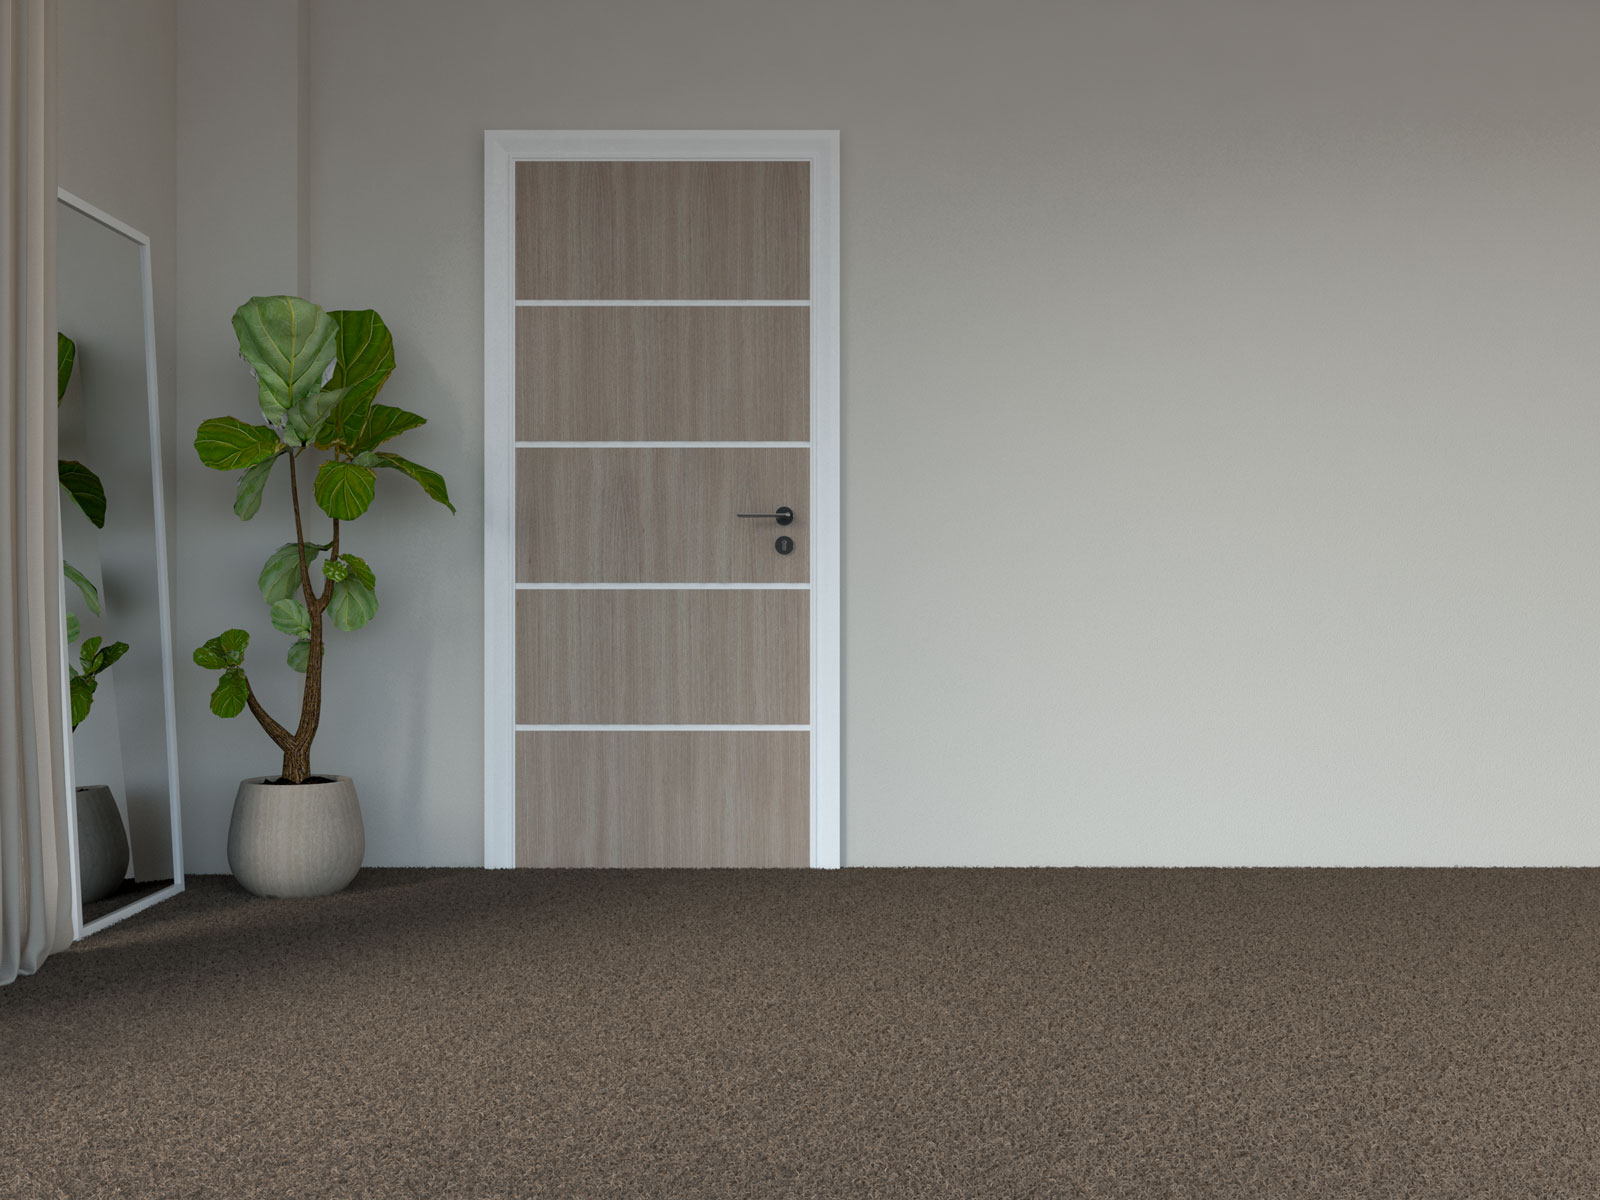 Light tan wall with dark brown carpet flooring